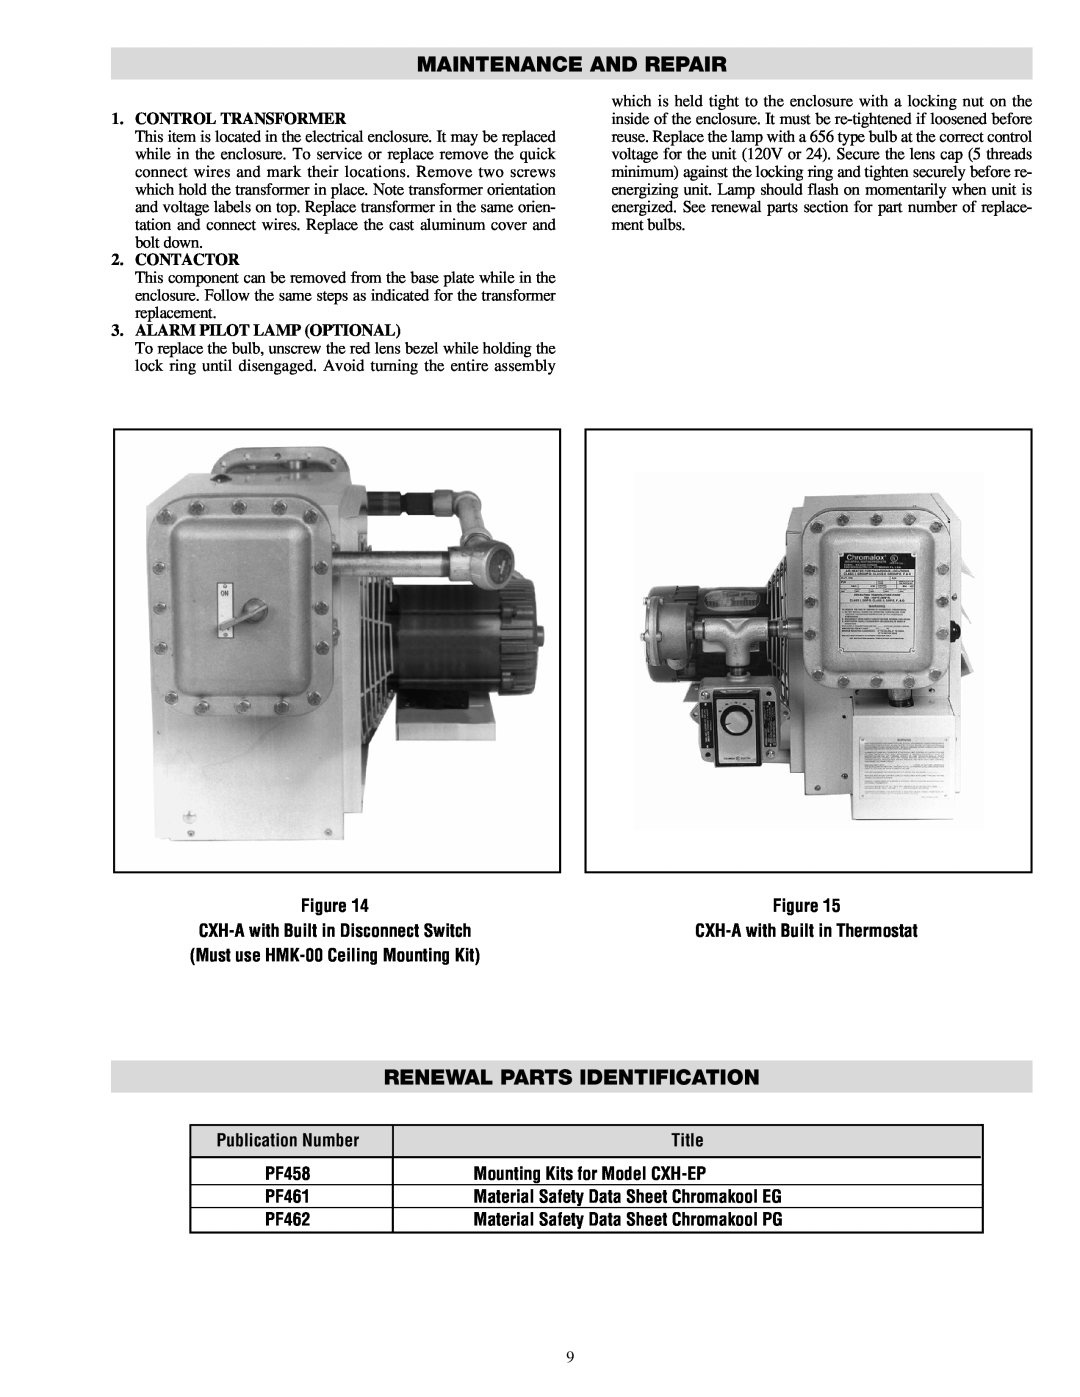 Chromalox PF490-5 Renewal Parts Identification, Control Transformer, Contactor, Alarm Pilot Lamp Optional, Title 